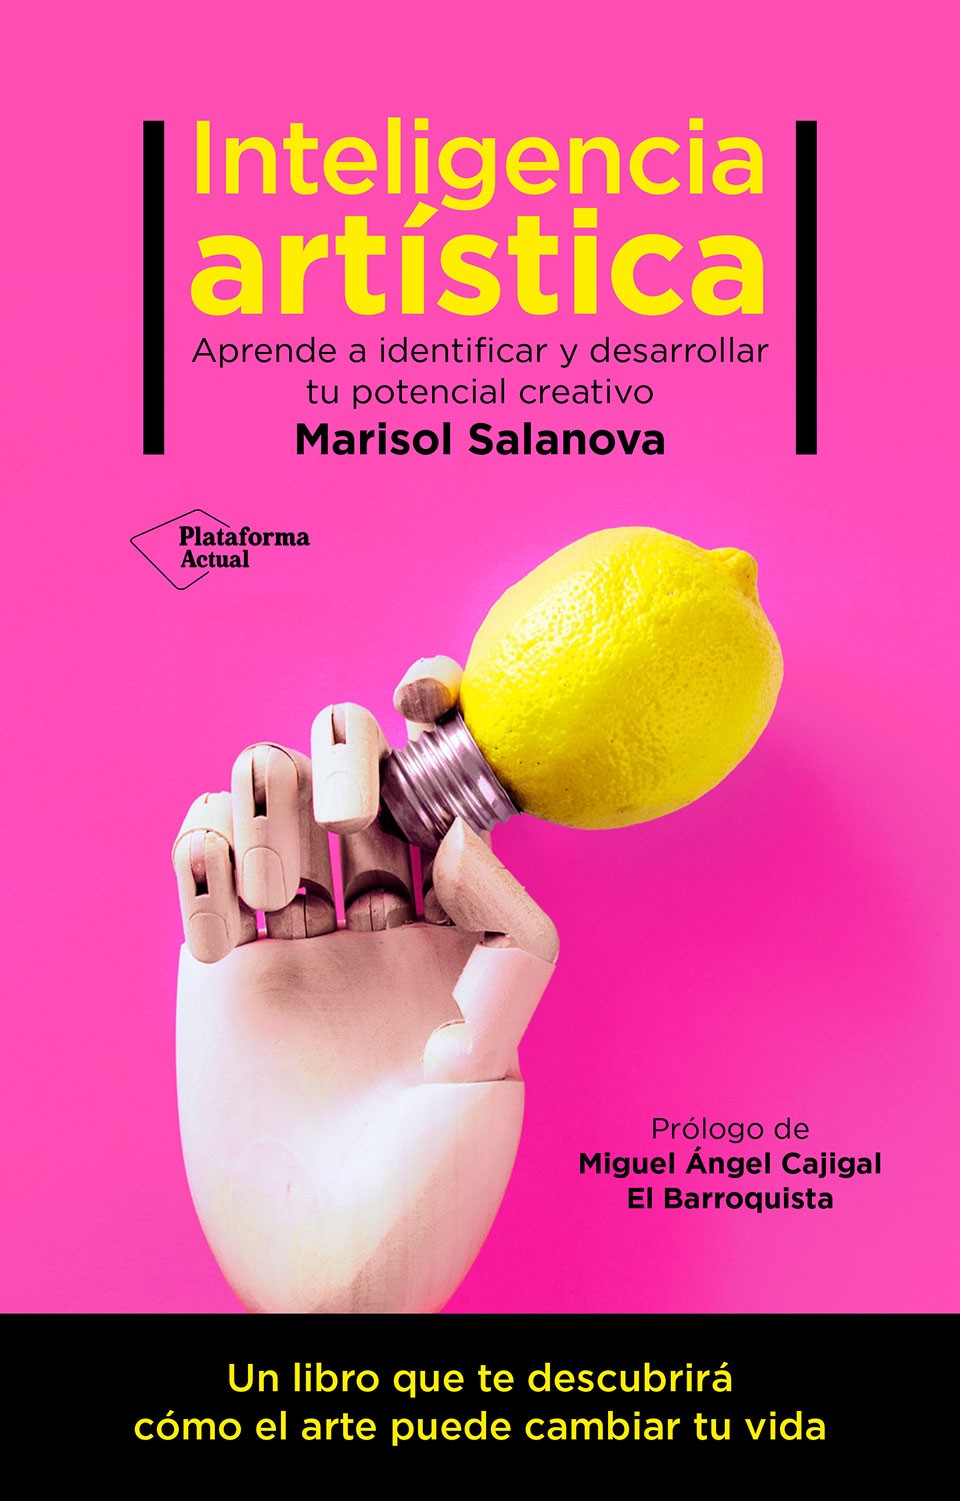 Marisol Salanova - Inteligencia artística